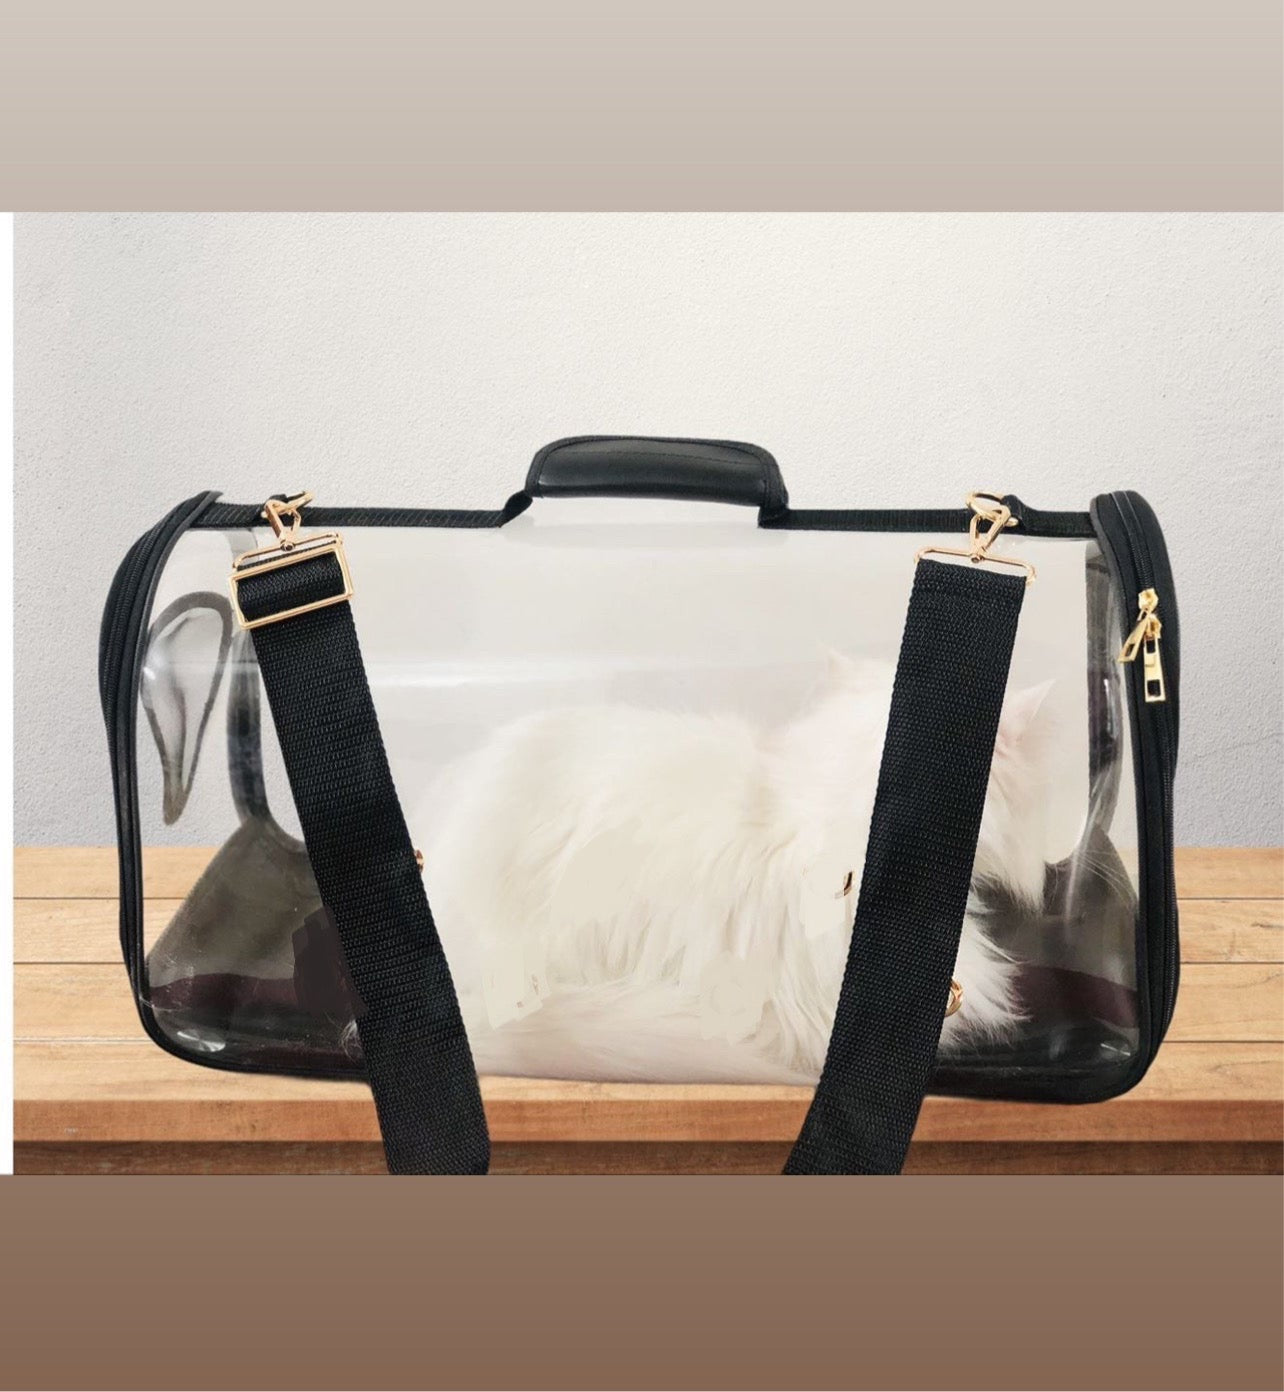 Pet traveling bag | Carrier | XL